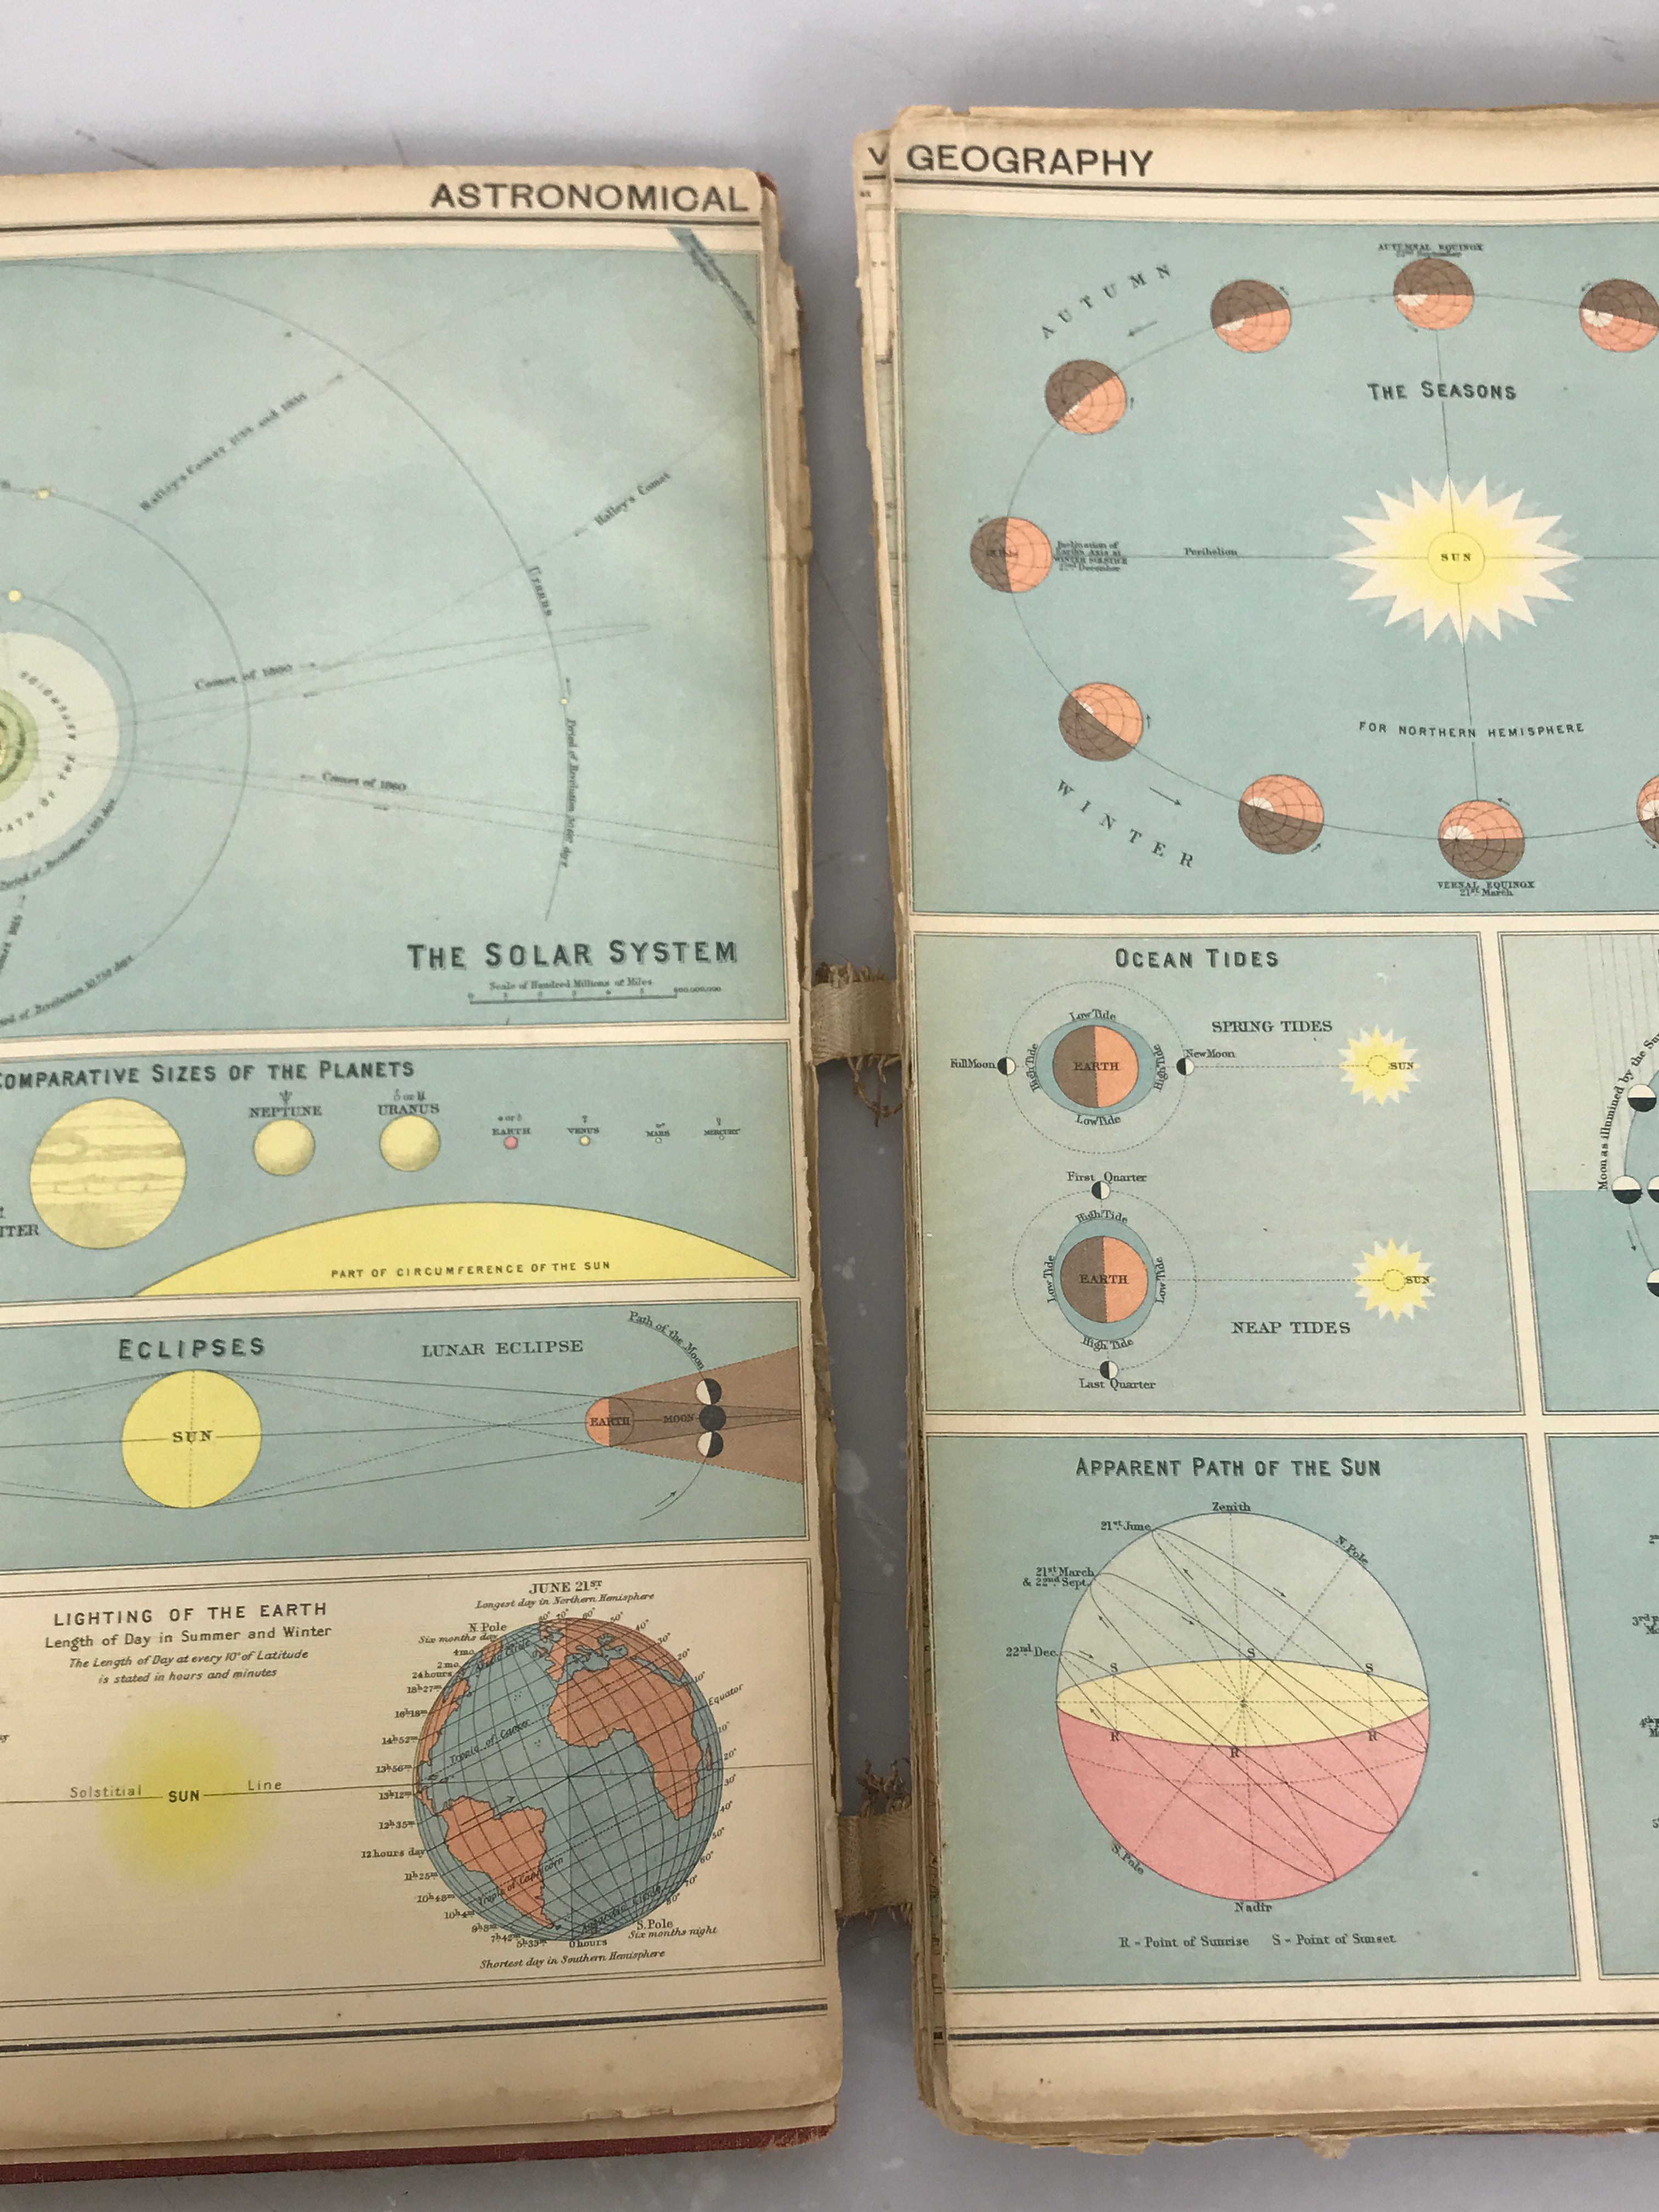 The Oxford Advanced Atlas by John Bartholomew Second Edition 1924